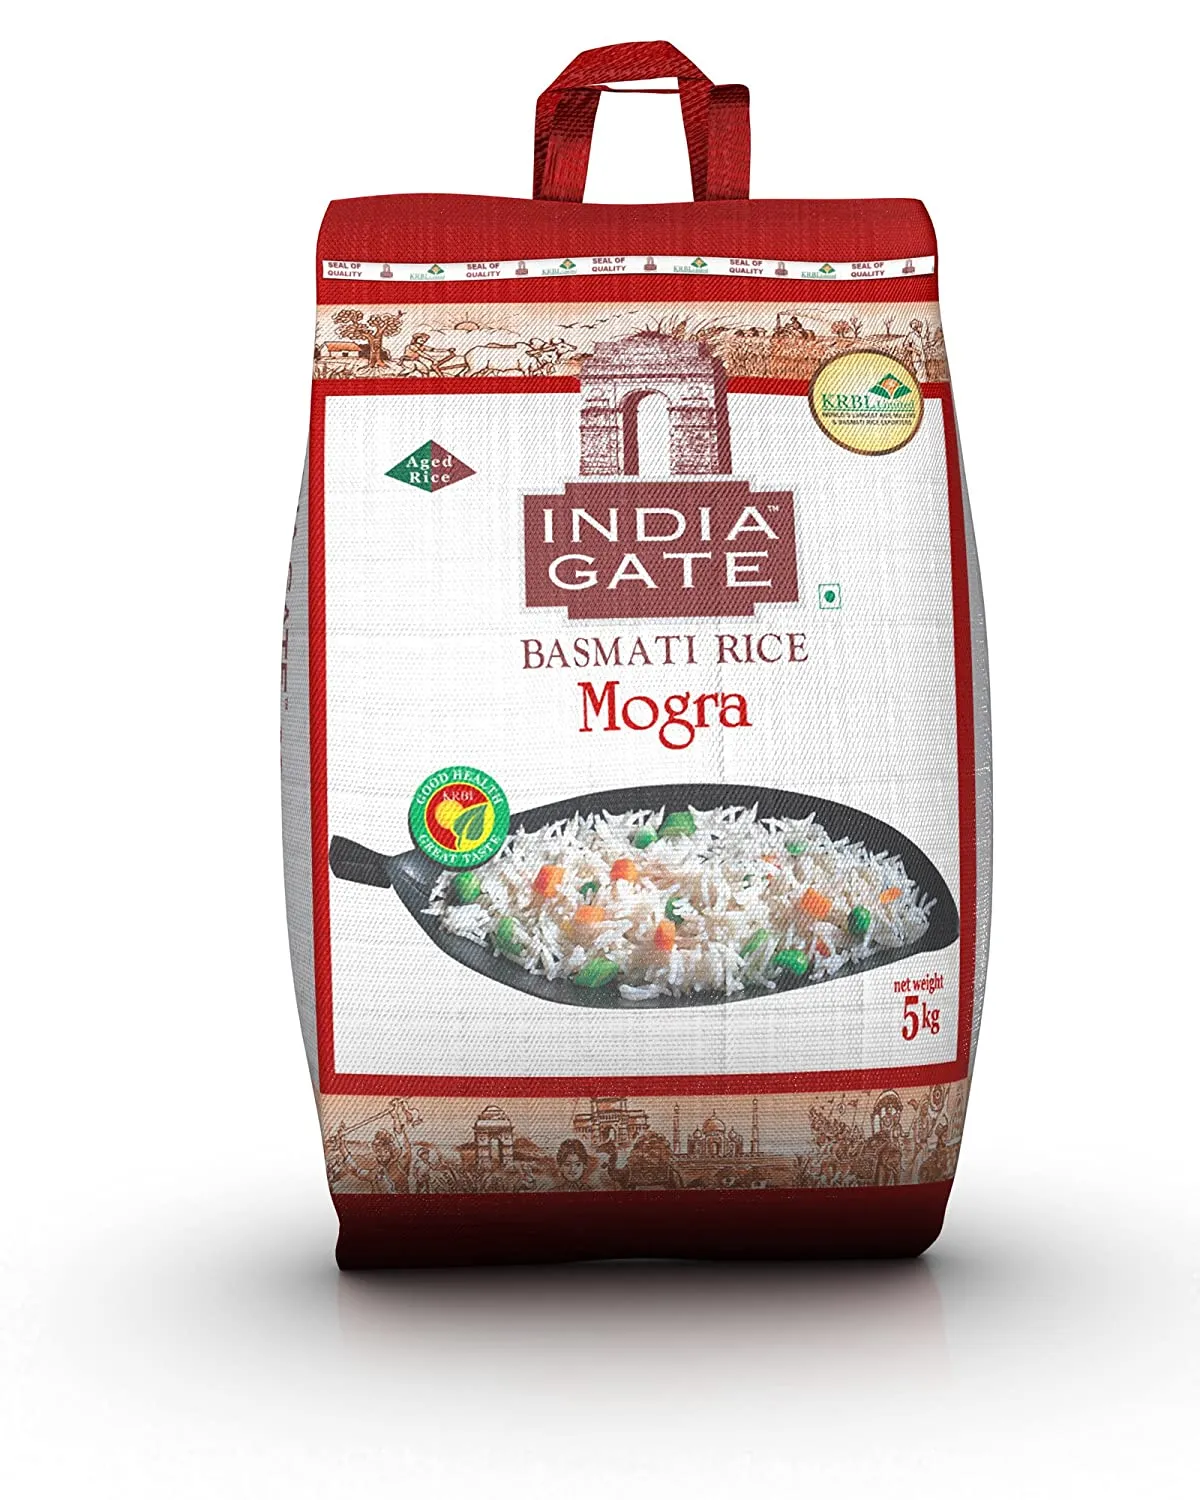 India Gate Basmati Rice Mini Mogra 5 KG